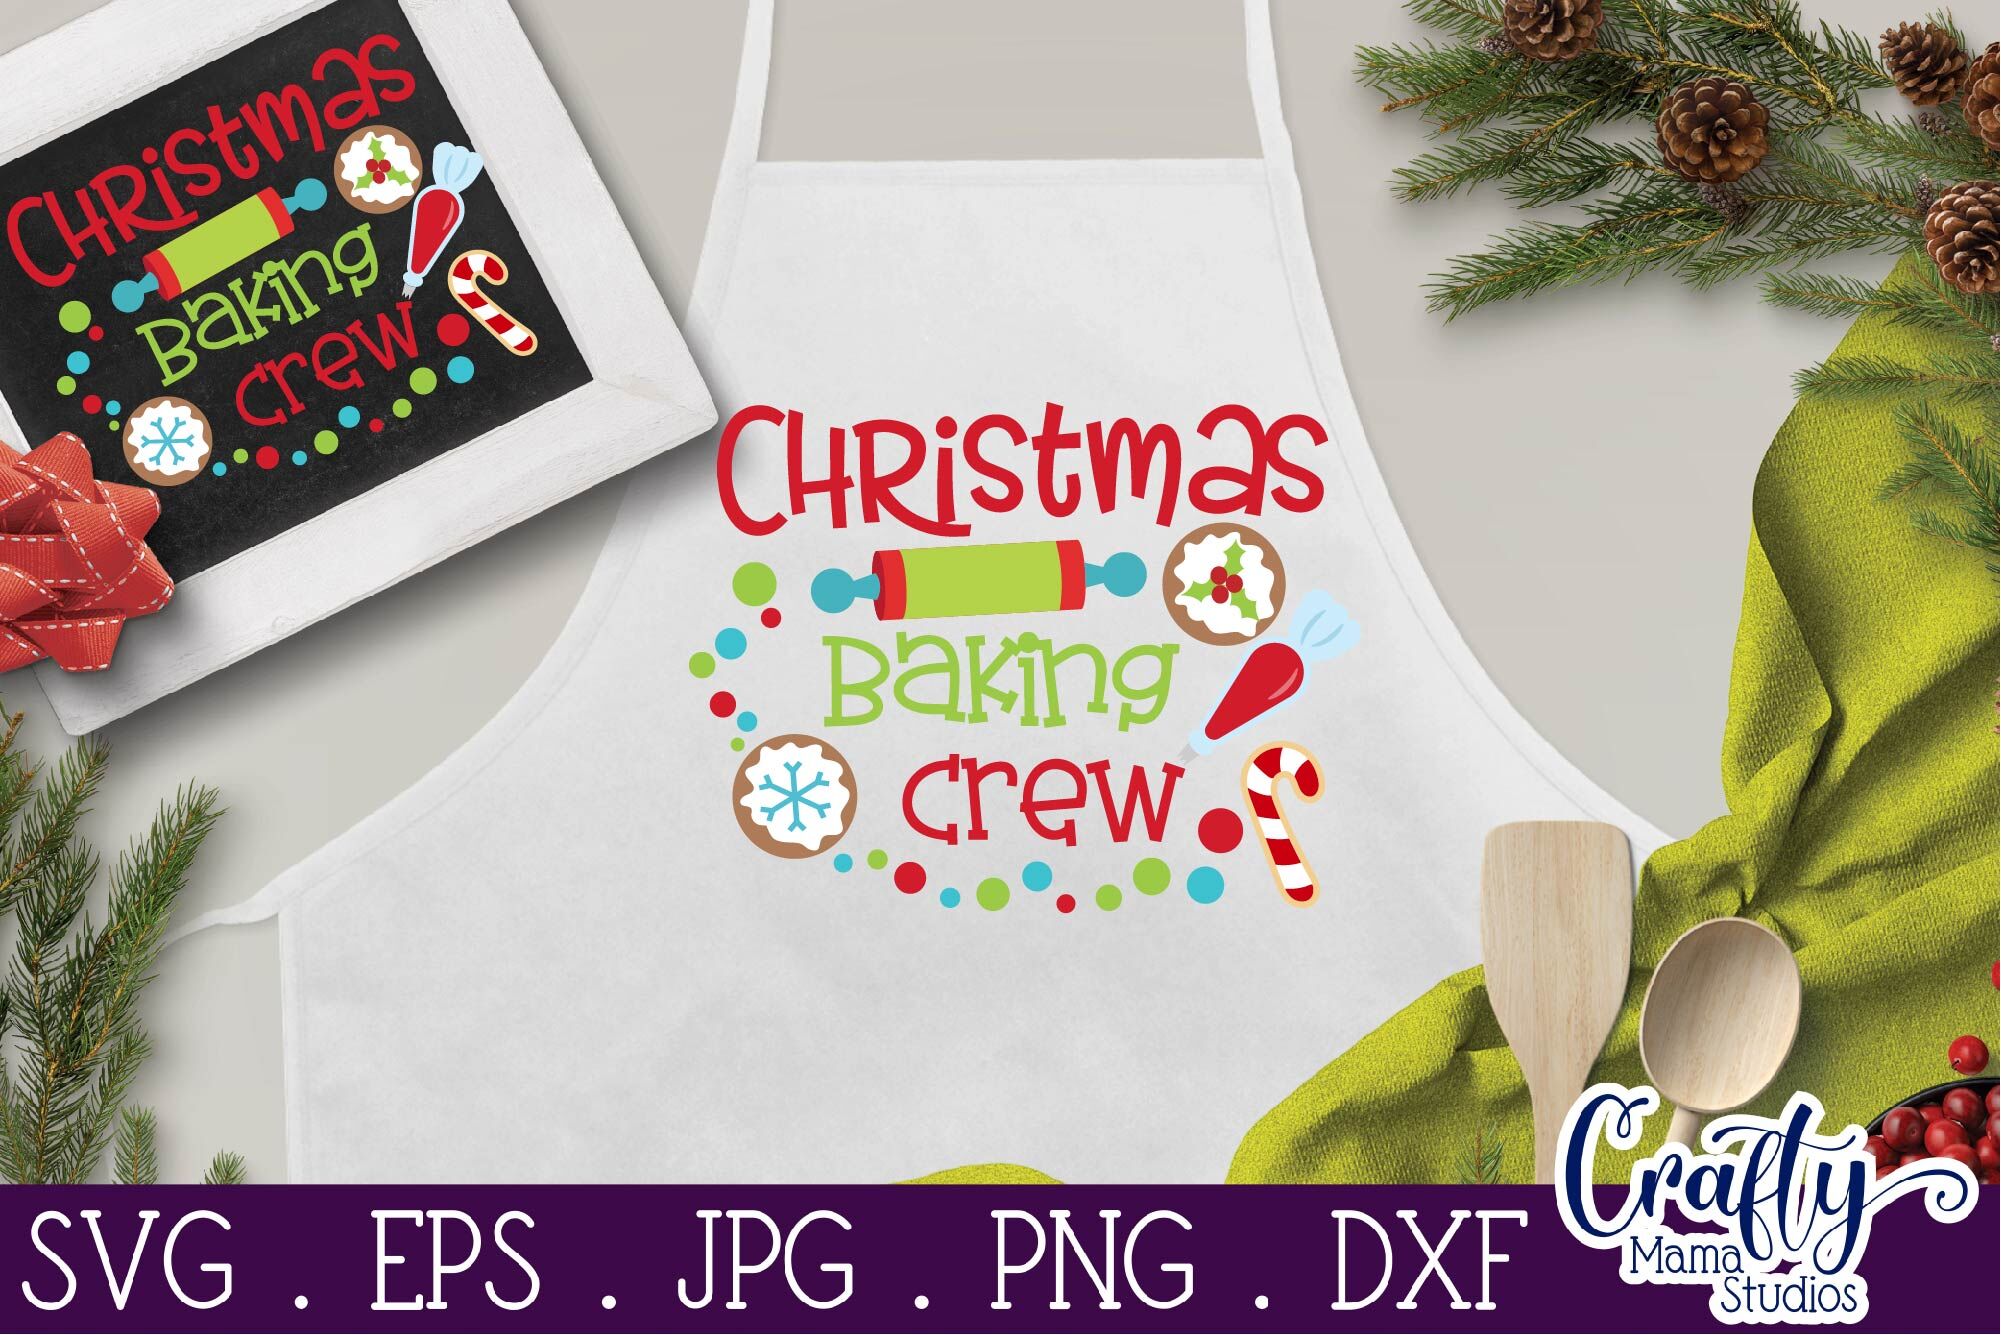 Download Christmas Svg Christmas Baking Crew Christmas Cookies Baking By Crafty Mama Studios Thehungryjpeg Com SVG Cut Files